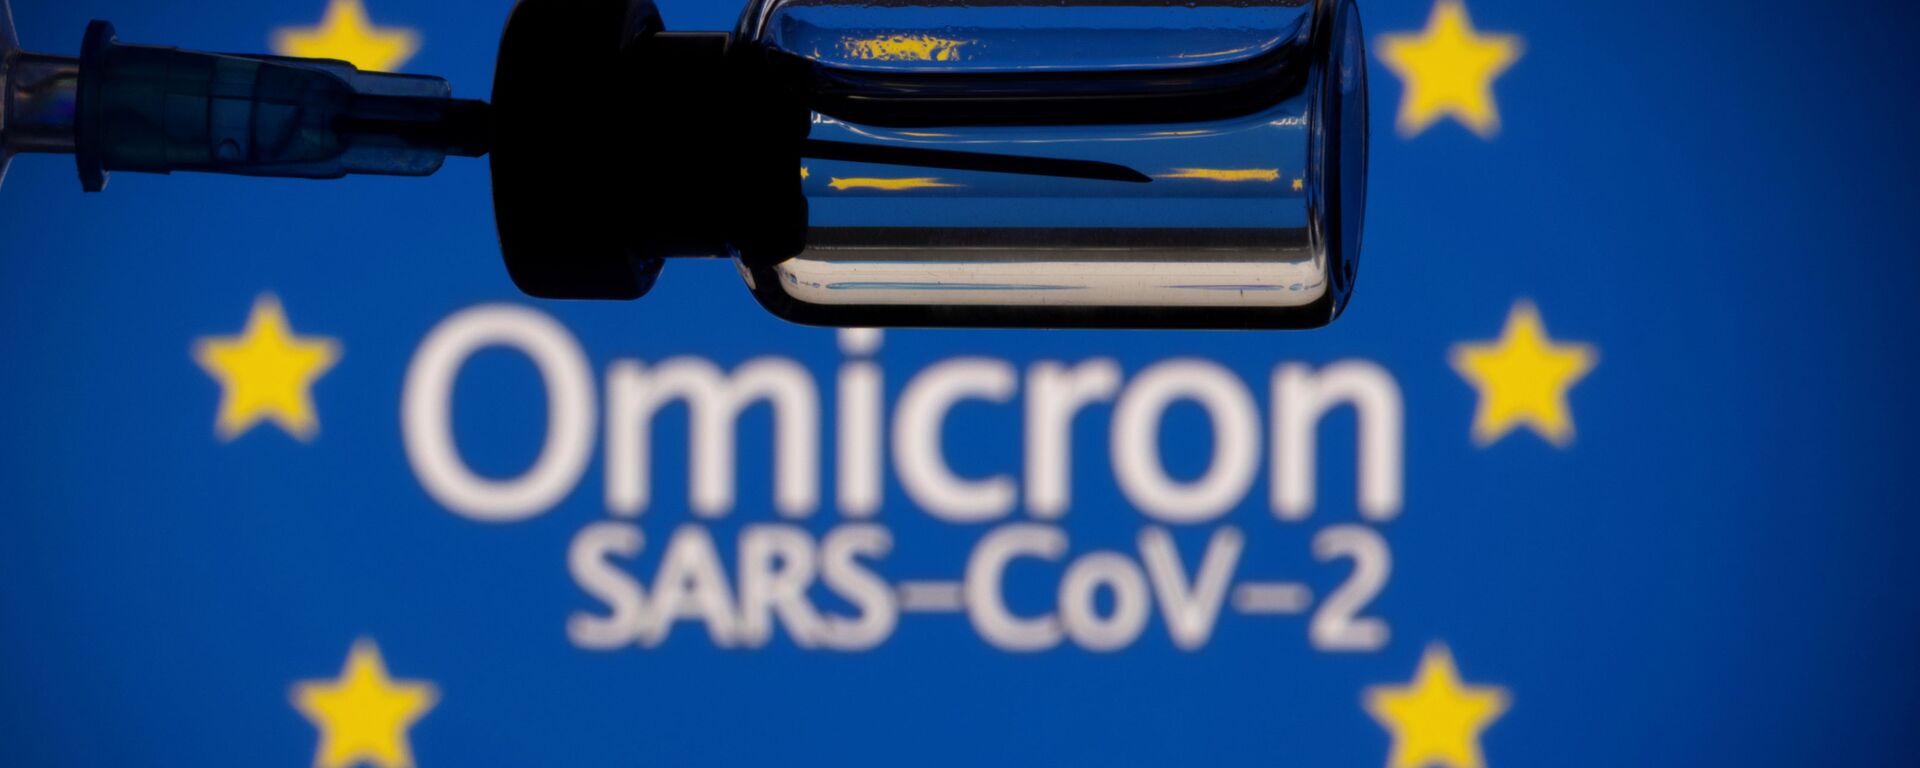 Шприц и флакон на фоне надписи Omicron SARS-CoV-2 - Sputnik 日本, 1920, 17.02.2022